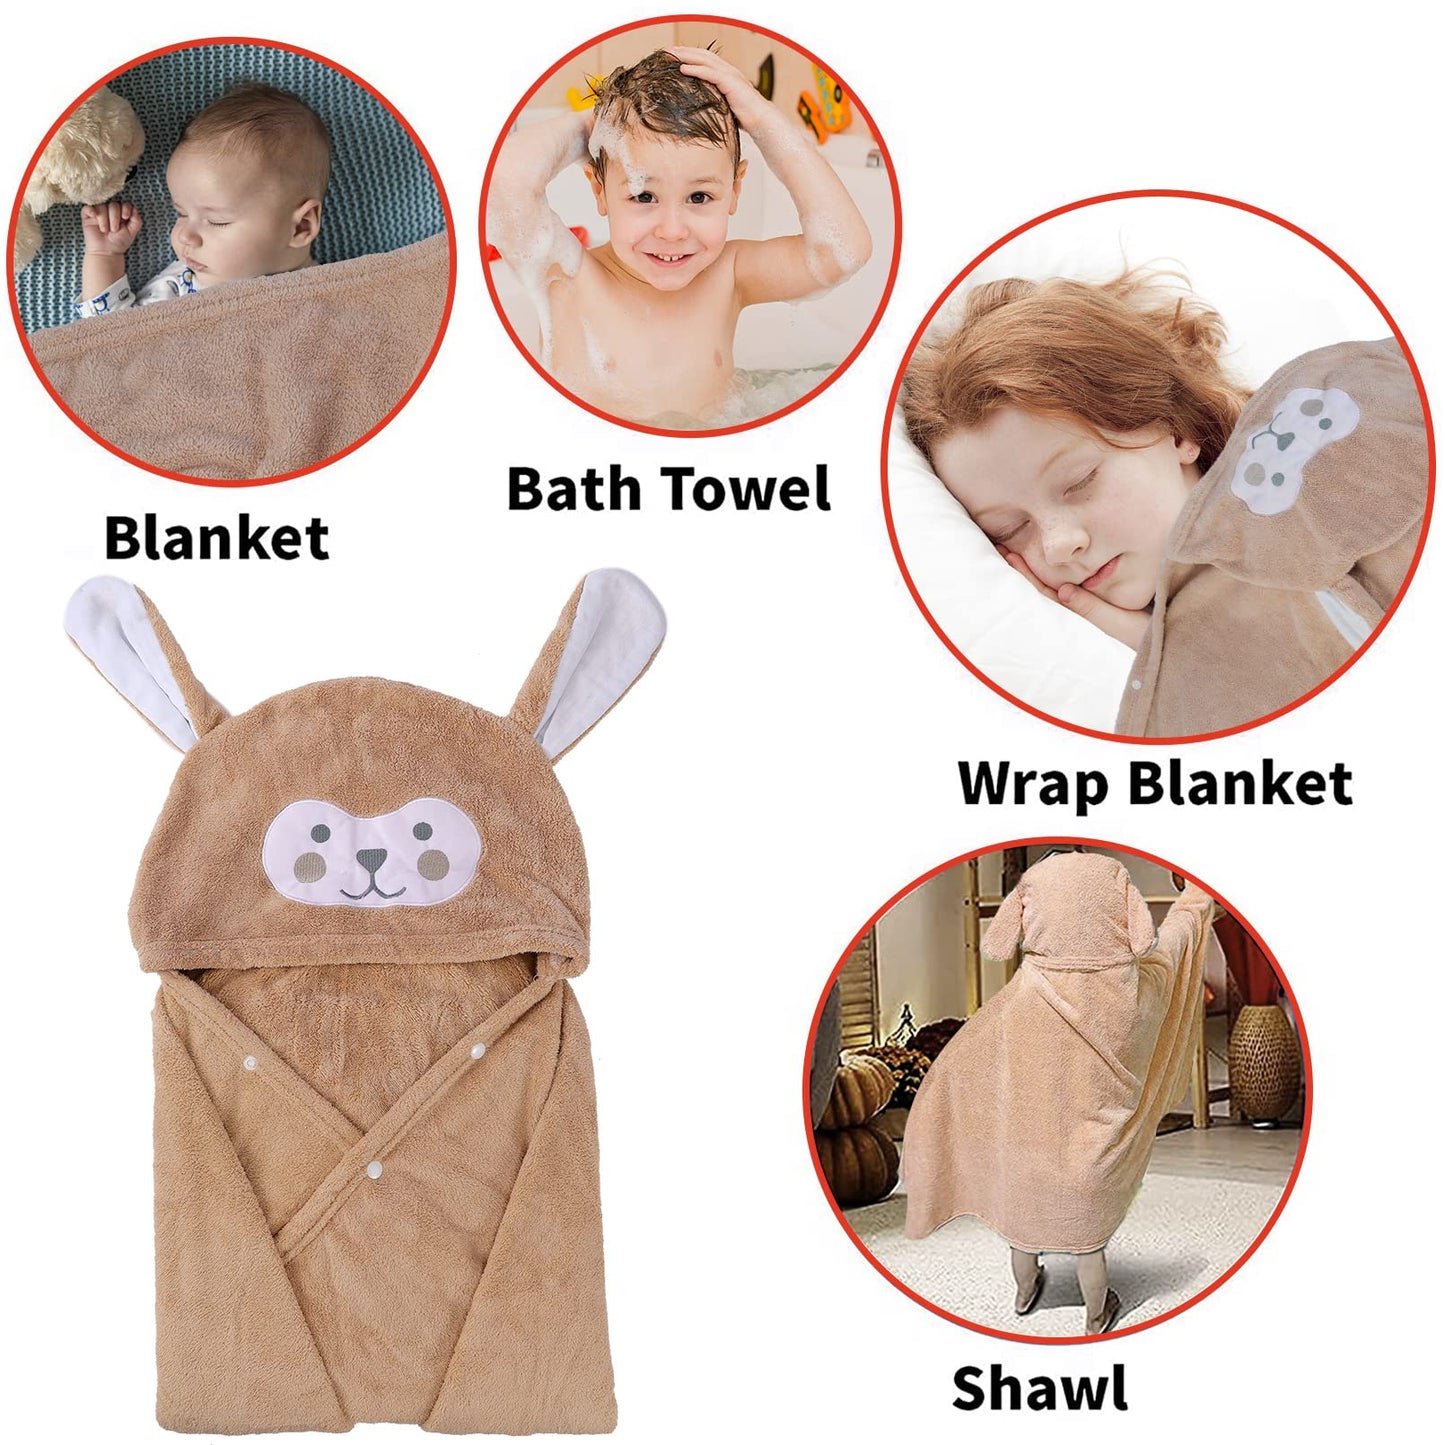 Visen Premium Hooded Towel for Kids,-28×55 INCH Large Size Kids Bath Towel,Ultra Soft Hooded Towel Wrap for Boys Girls